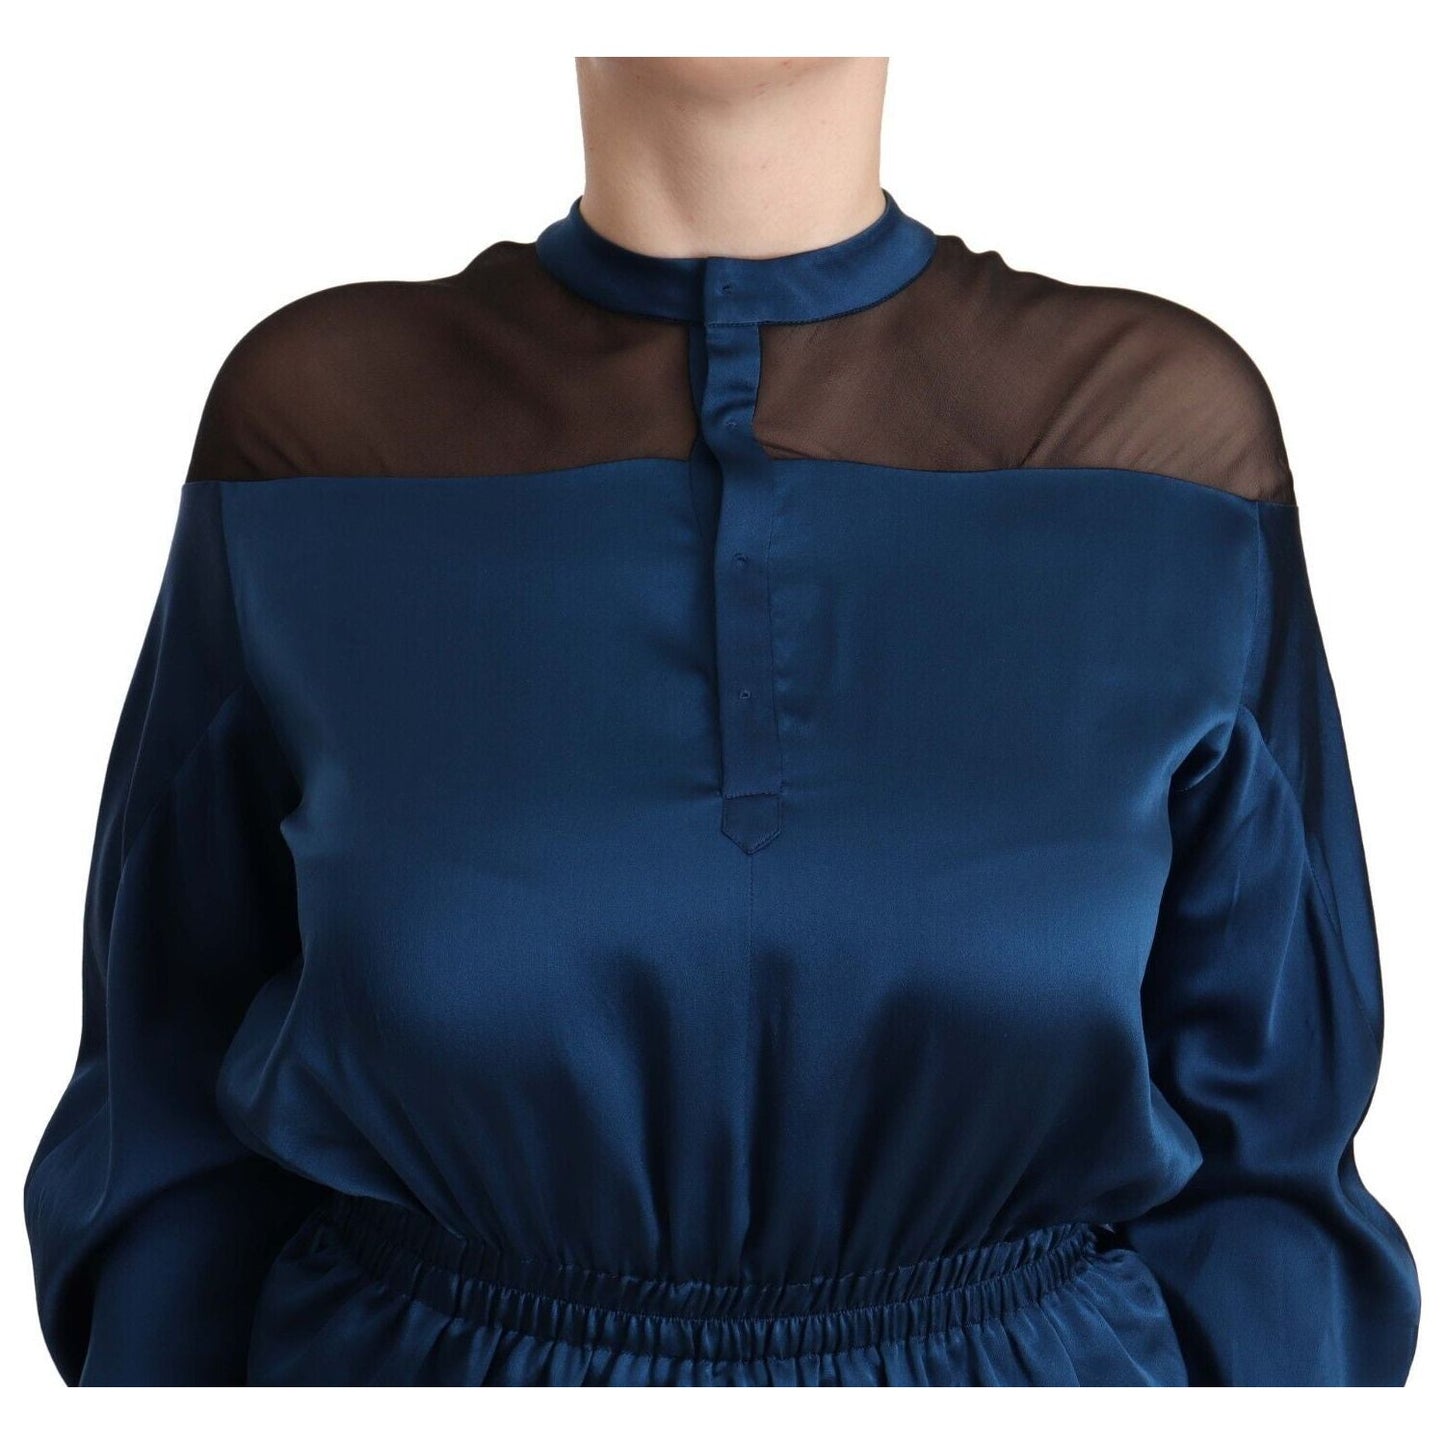 Masha Ma Elegant Crew Neck Silk Blouse in Blue WOMAN TOPS AND SHIRTS blue-silk-long-sleeves-elastic-waist-top-blouse s-l1600-3-28-fbc3da90-2a0.jpg